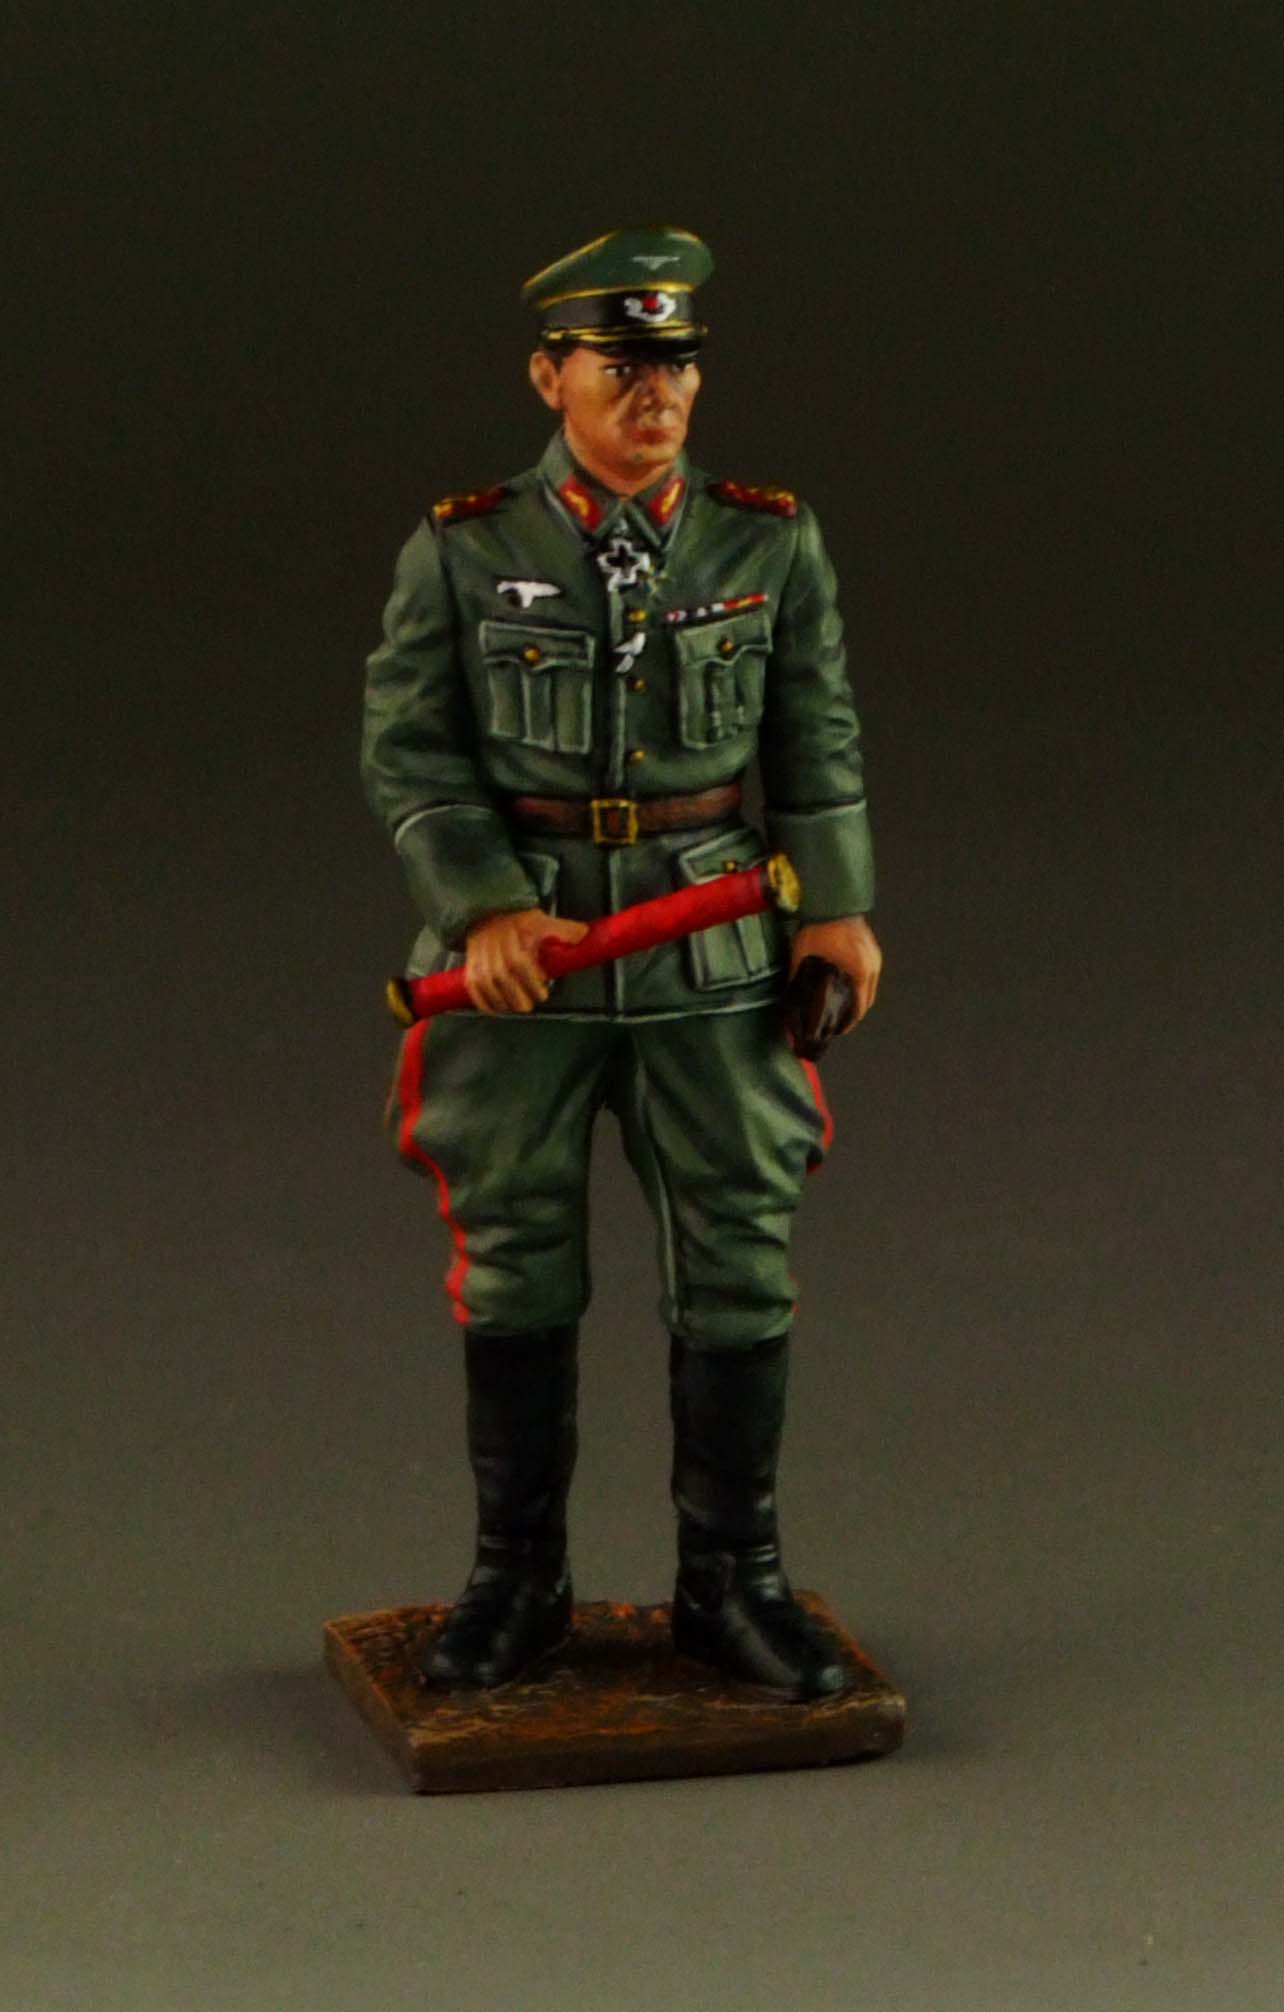 Erwin Rommel holding Field Marshals Baton